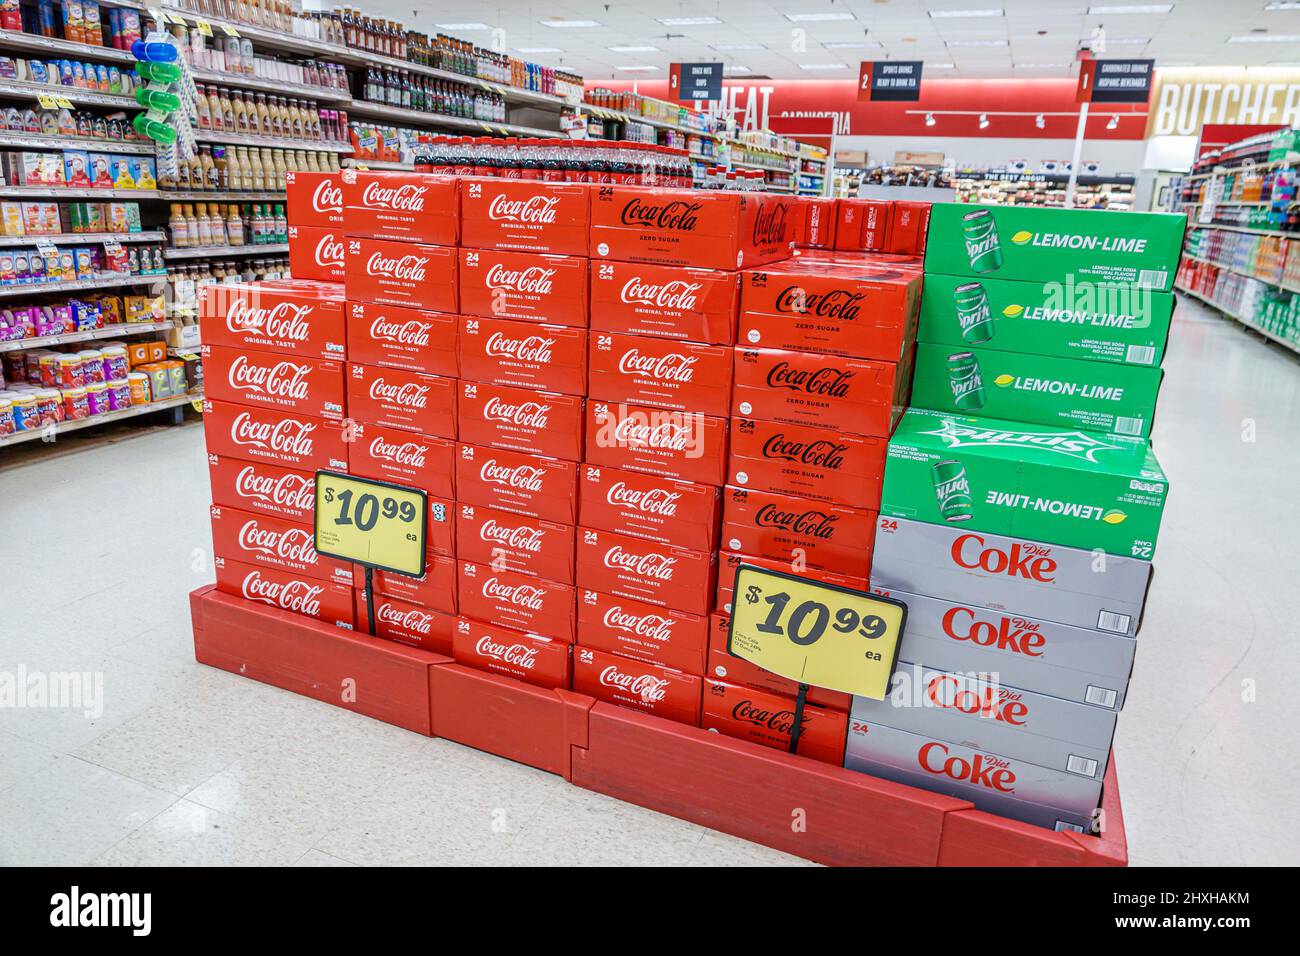 Miami Florida Winn-Dixie grocery store supermarket inside interior display sale 24 cases Coca-Cola Coke Stock Photo